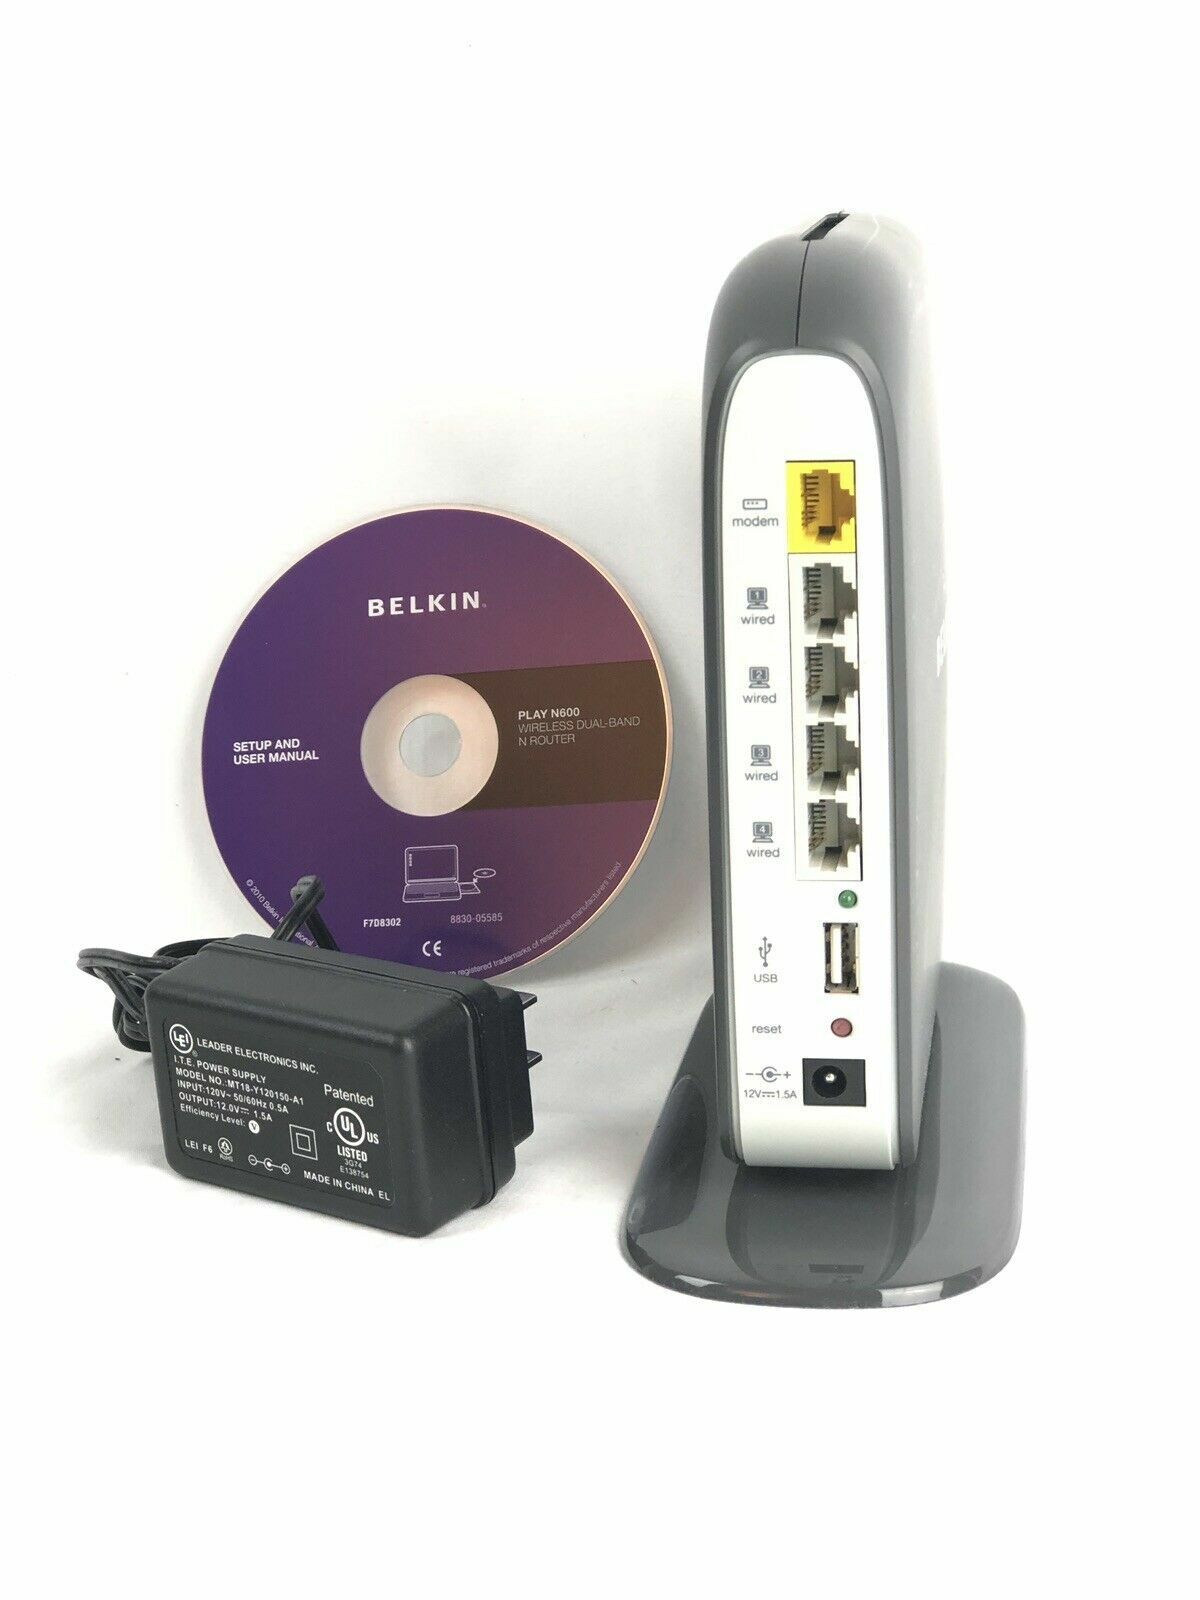 BELKIN Play N600 Wireless Dual Band N Router High Speed Gaming Video Streaming 